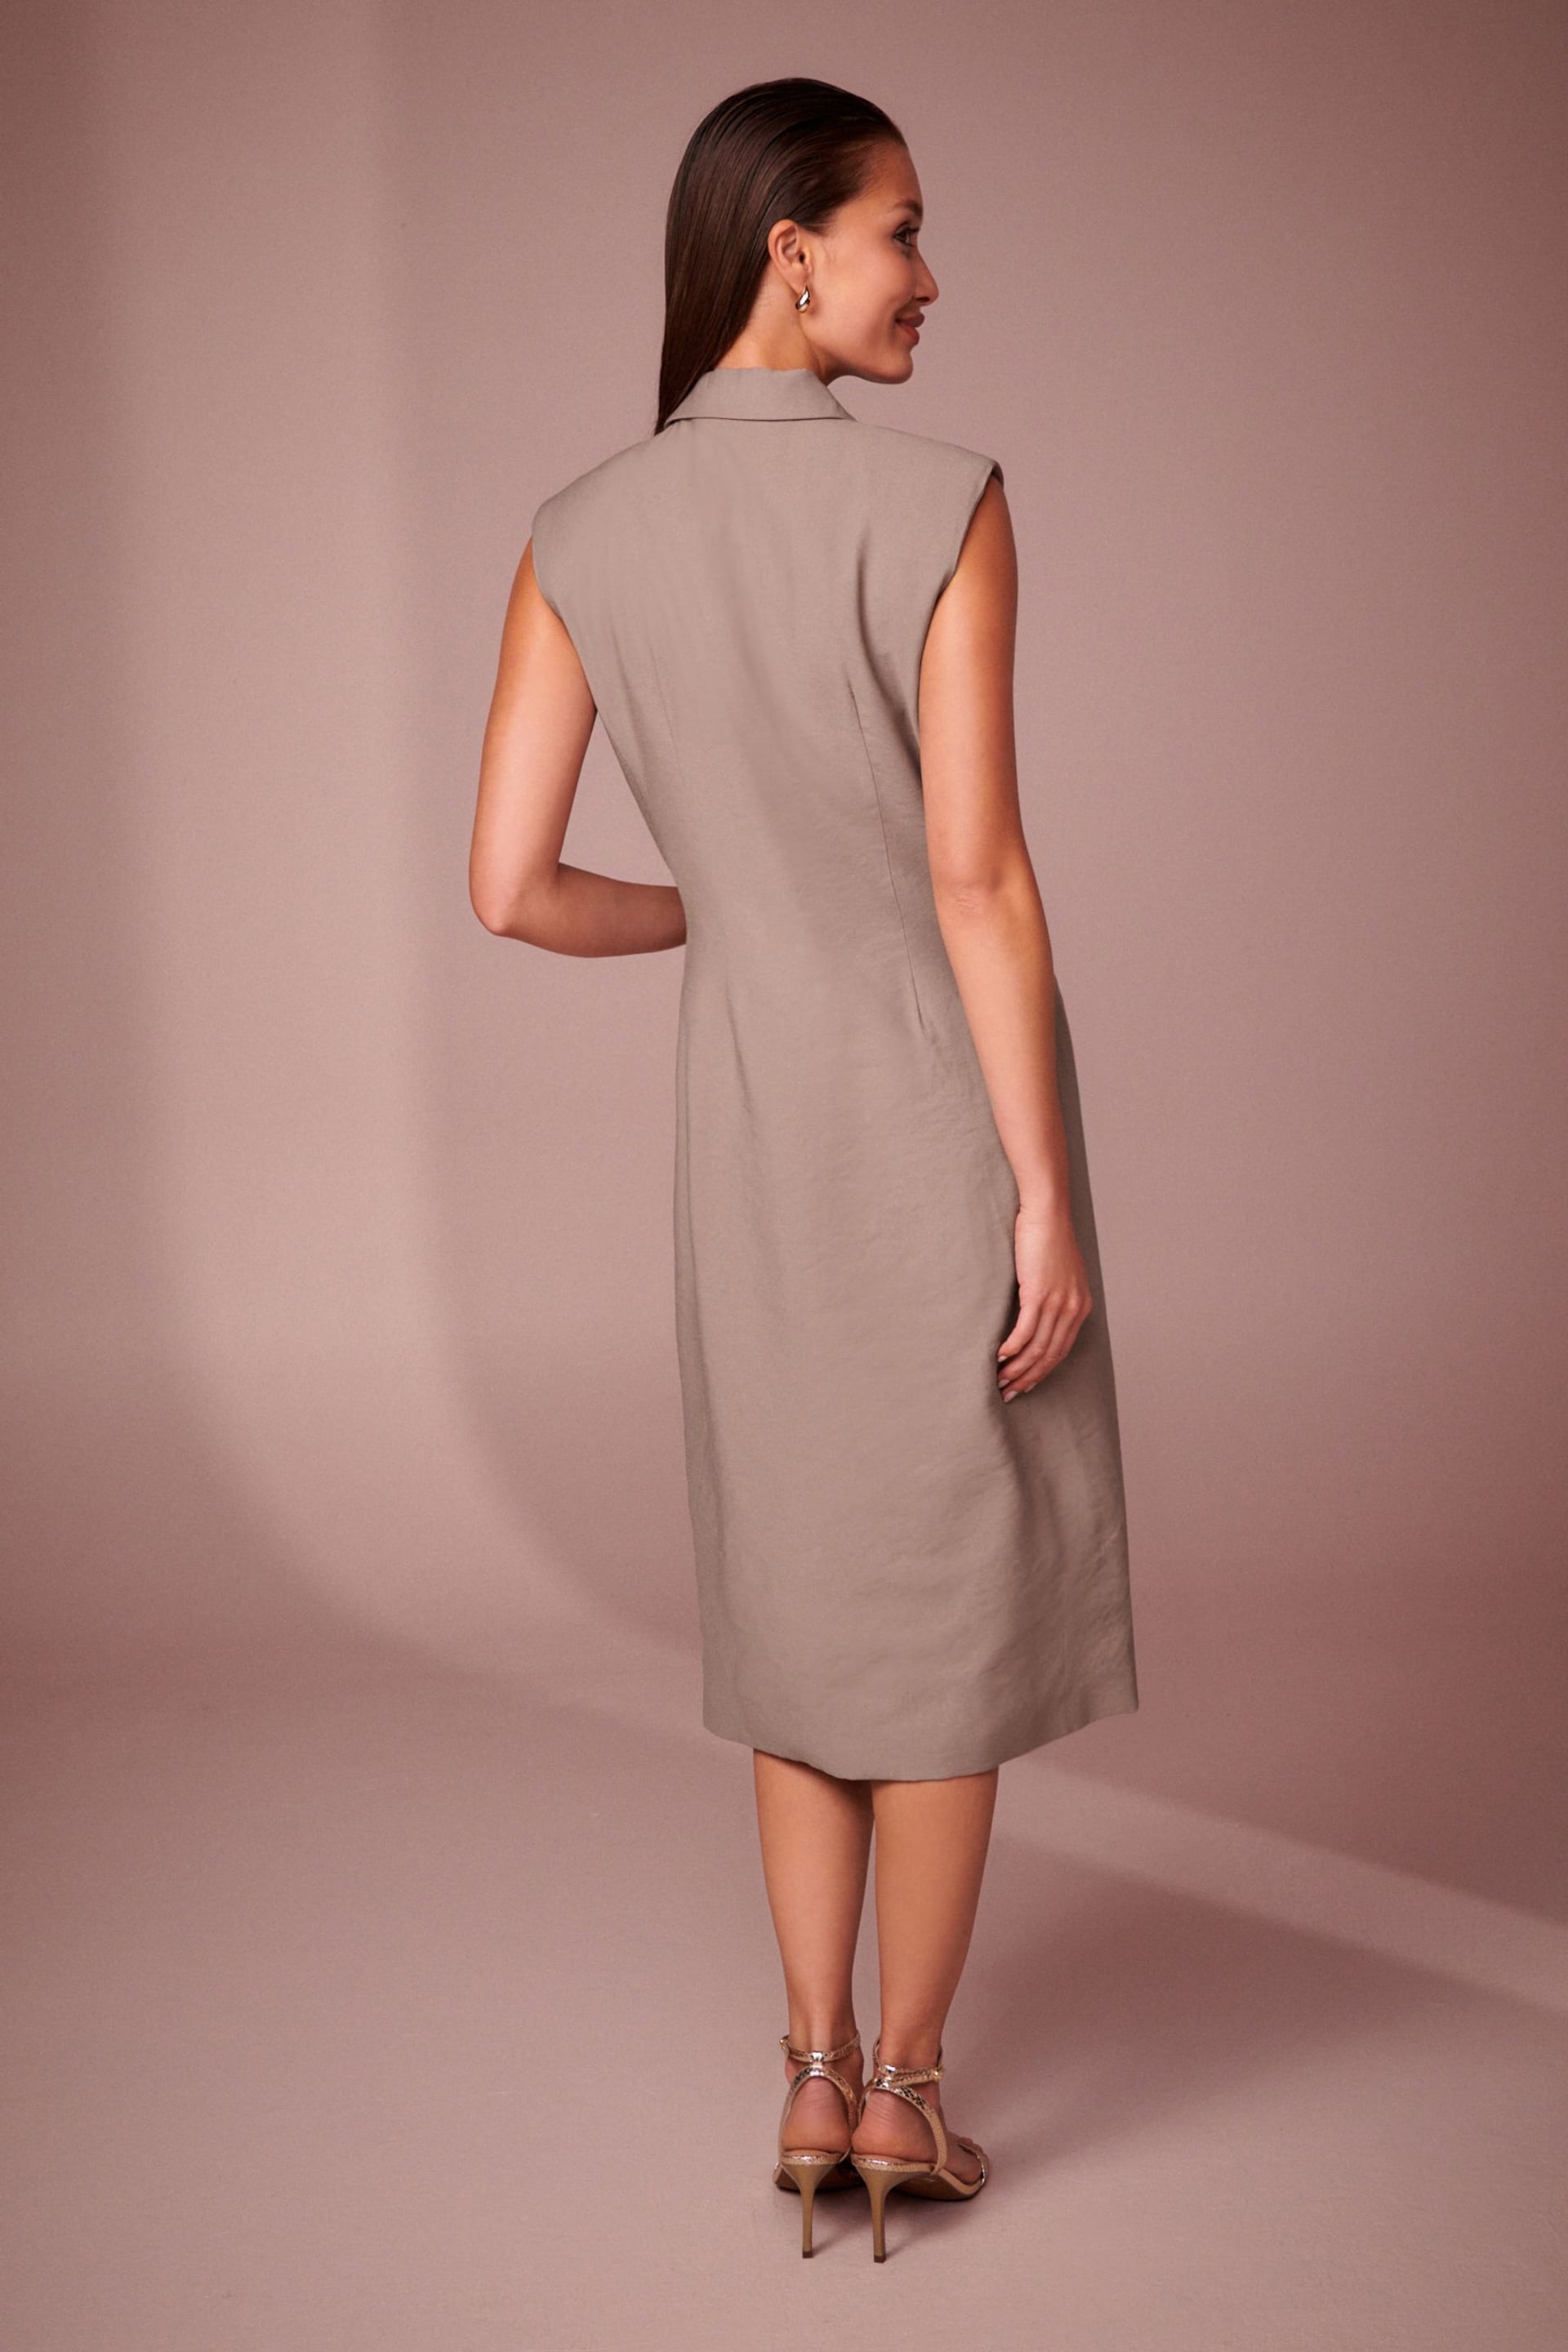 Mink Brown Mini Sleeveless Blazer Dress - Image 2 of 5